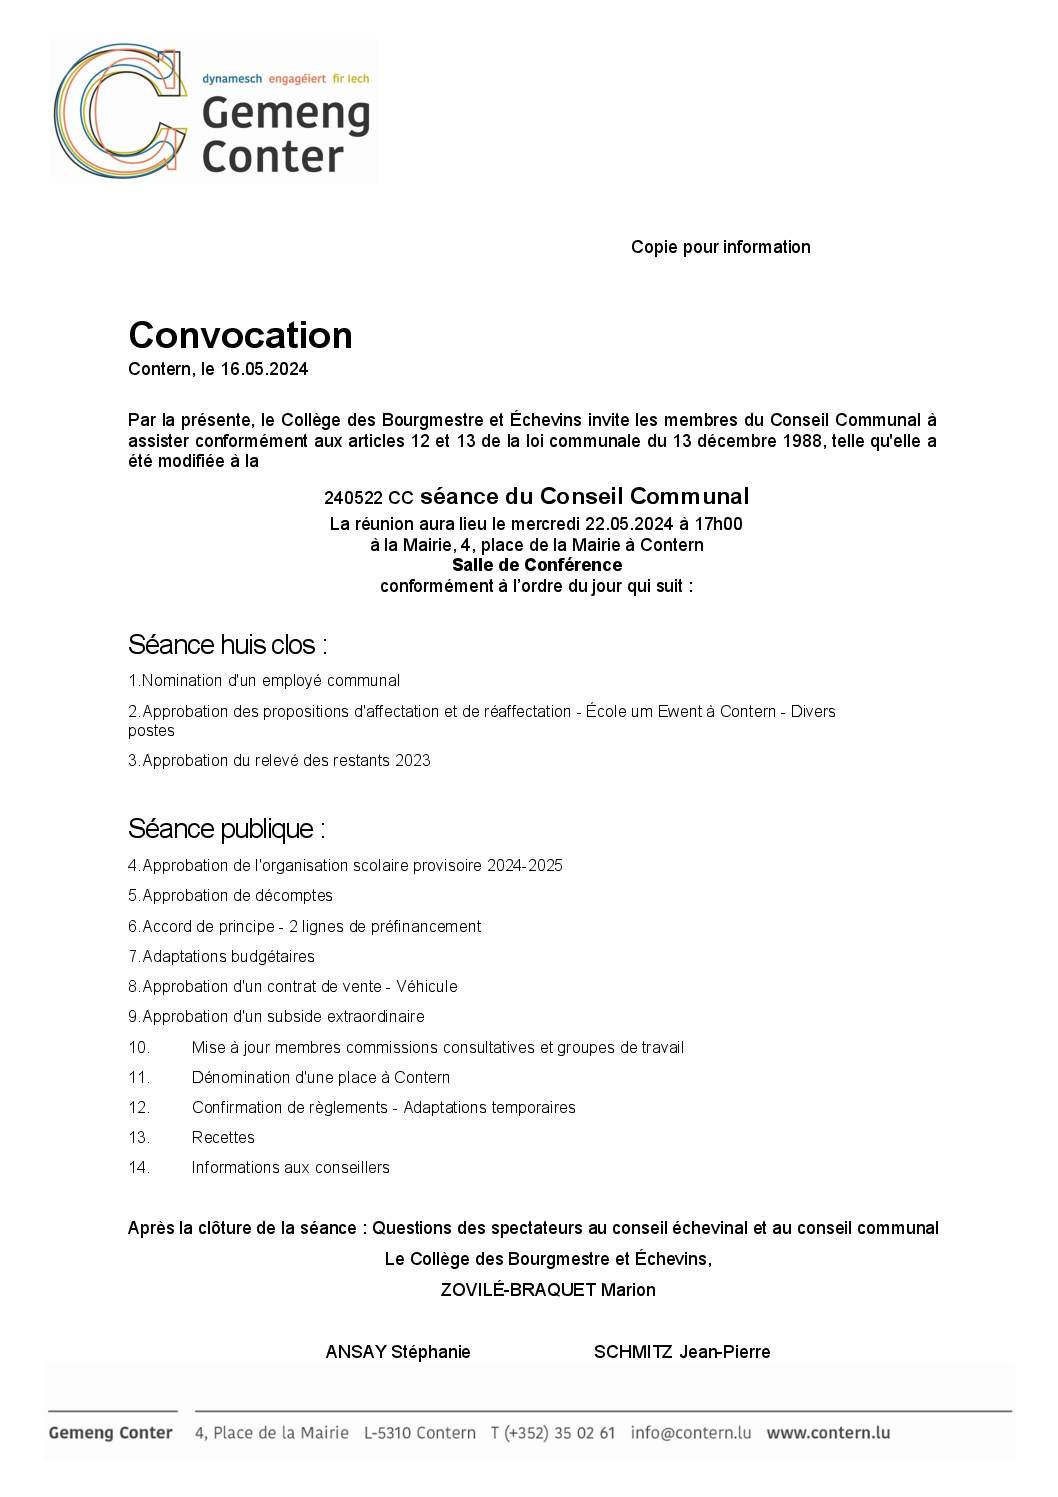 Convocation - Séance du Conseil Communal – 22 05 2024 1700